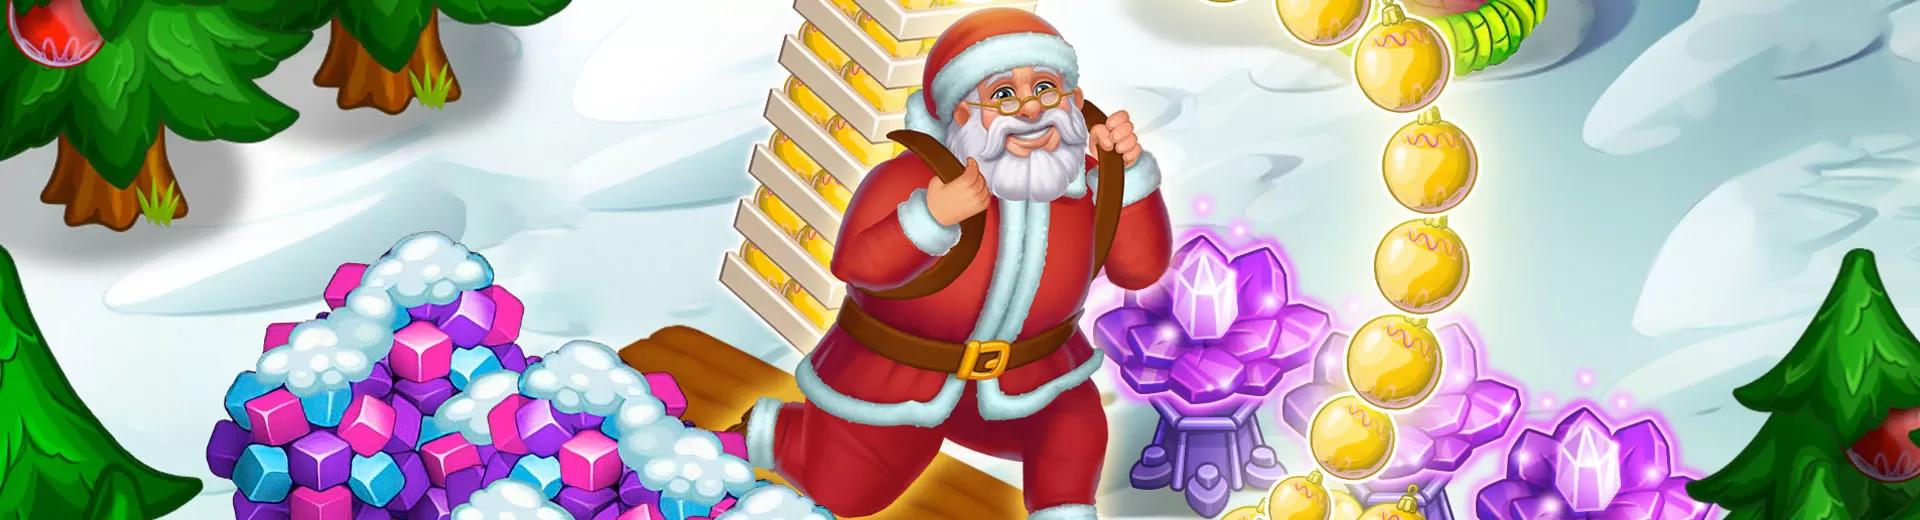 Snow Farm Santa Family Emulator Pc